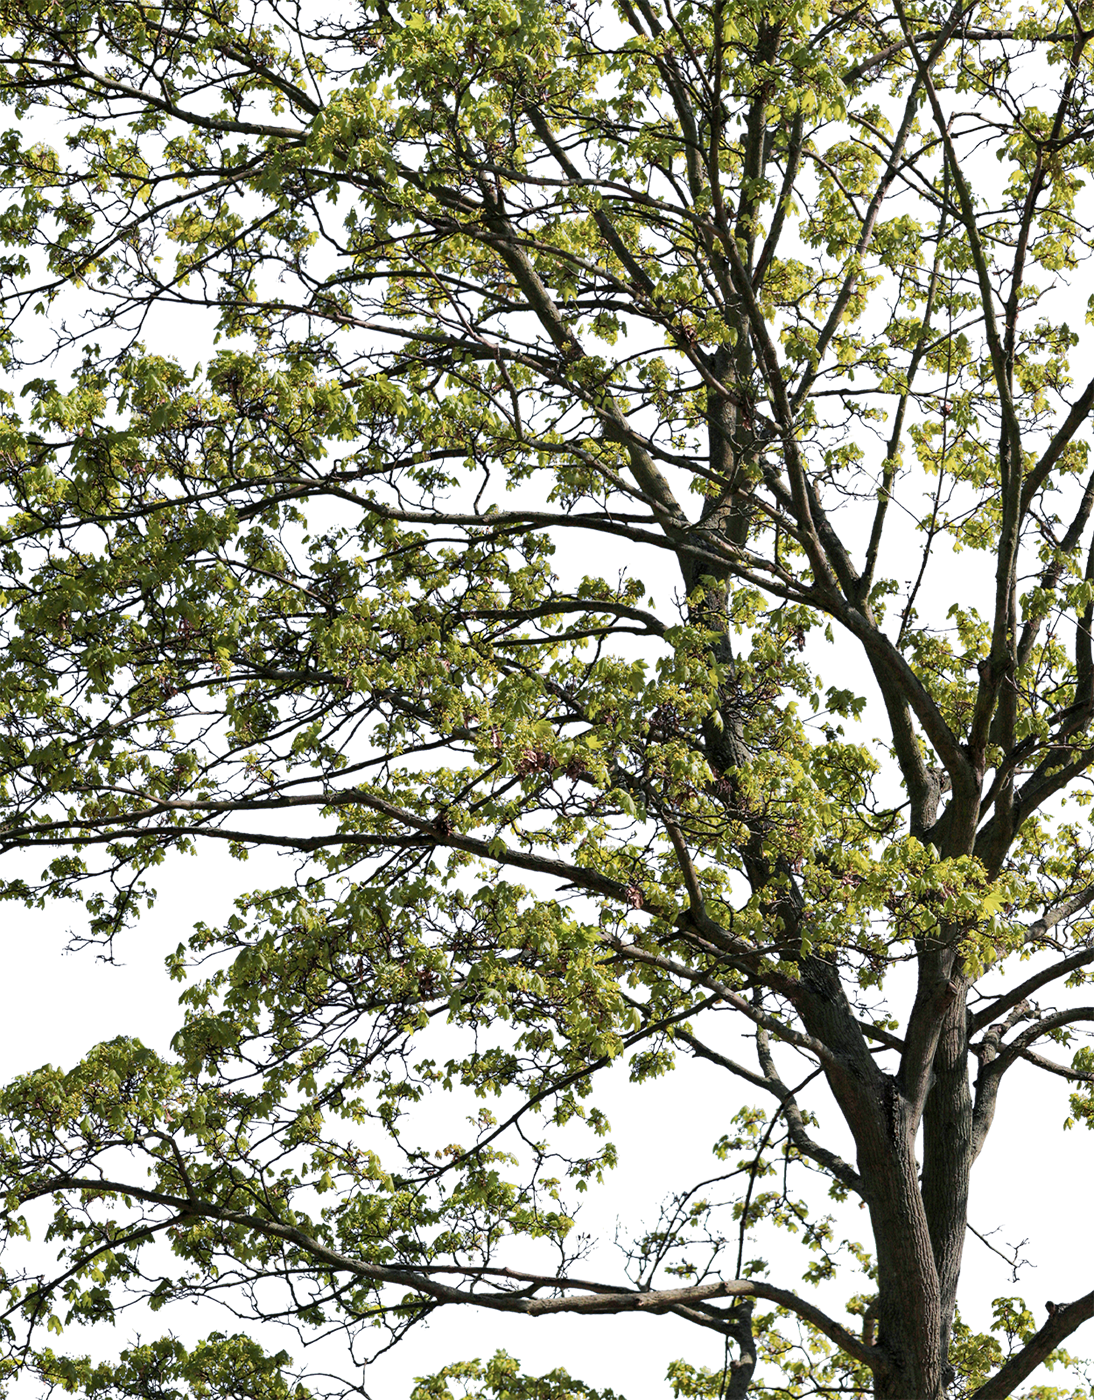 Acer platanoides l13